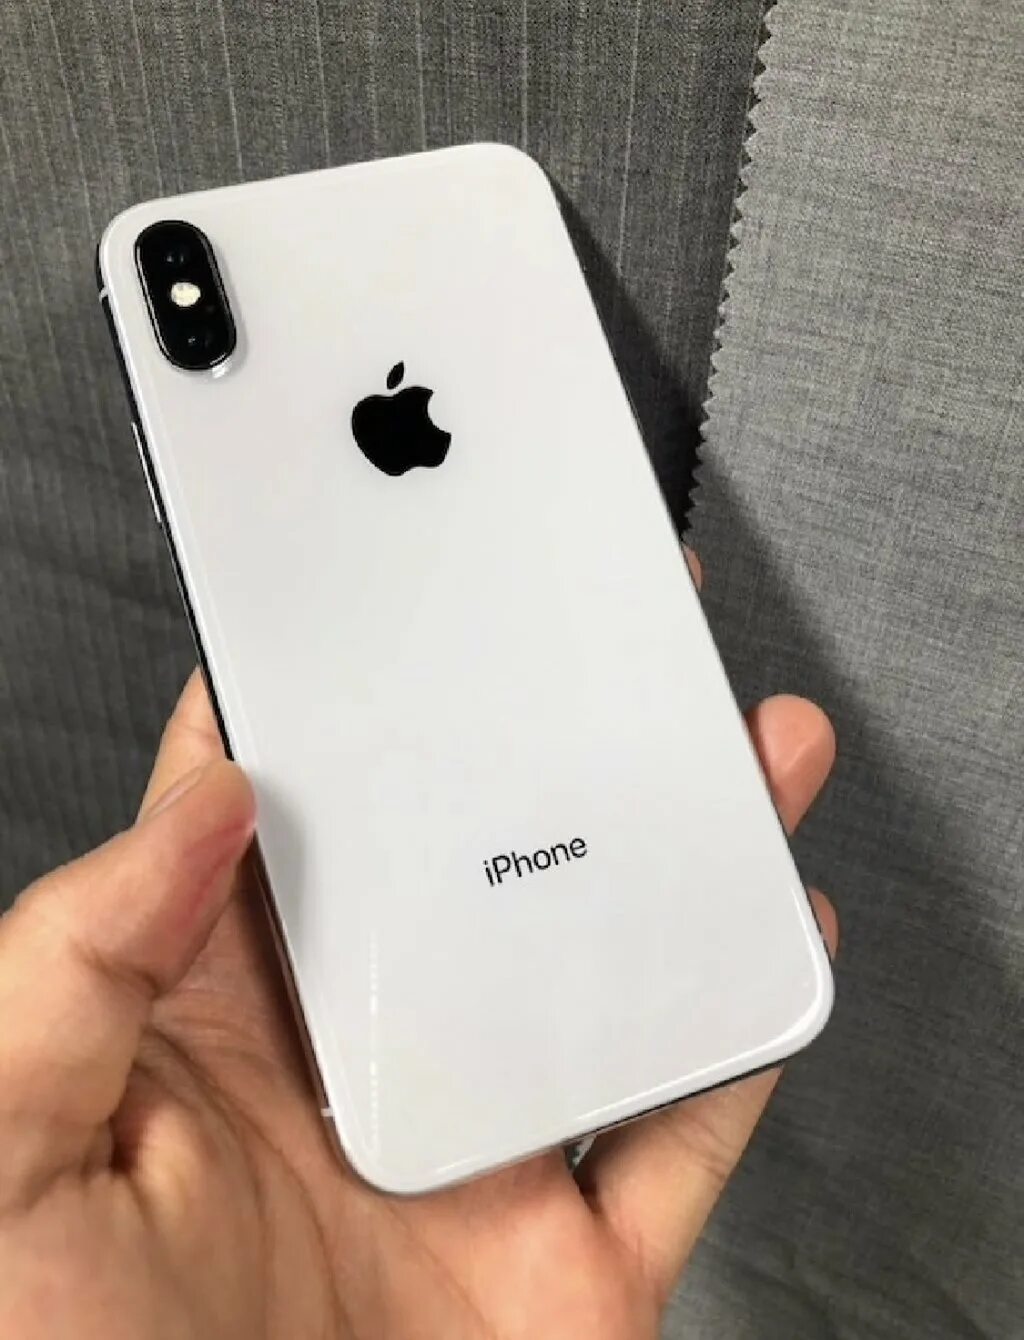 Apple x 64gb. Iphone x 64gb White. Iphone x 64gb белый. Айфон x 64 ГБ белый. Айфон XS 64 ГБ белый.